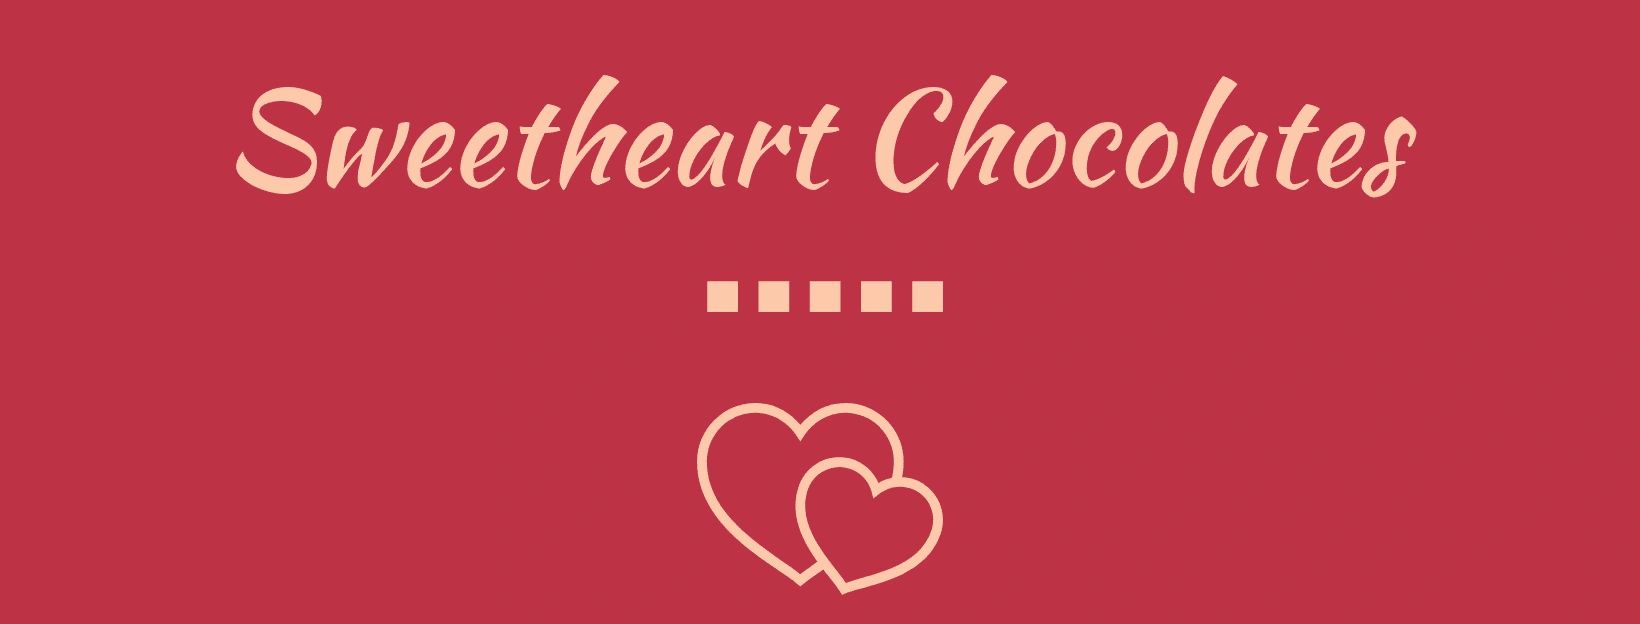 Sweetheart Chocolates, hearts, chocolatier
